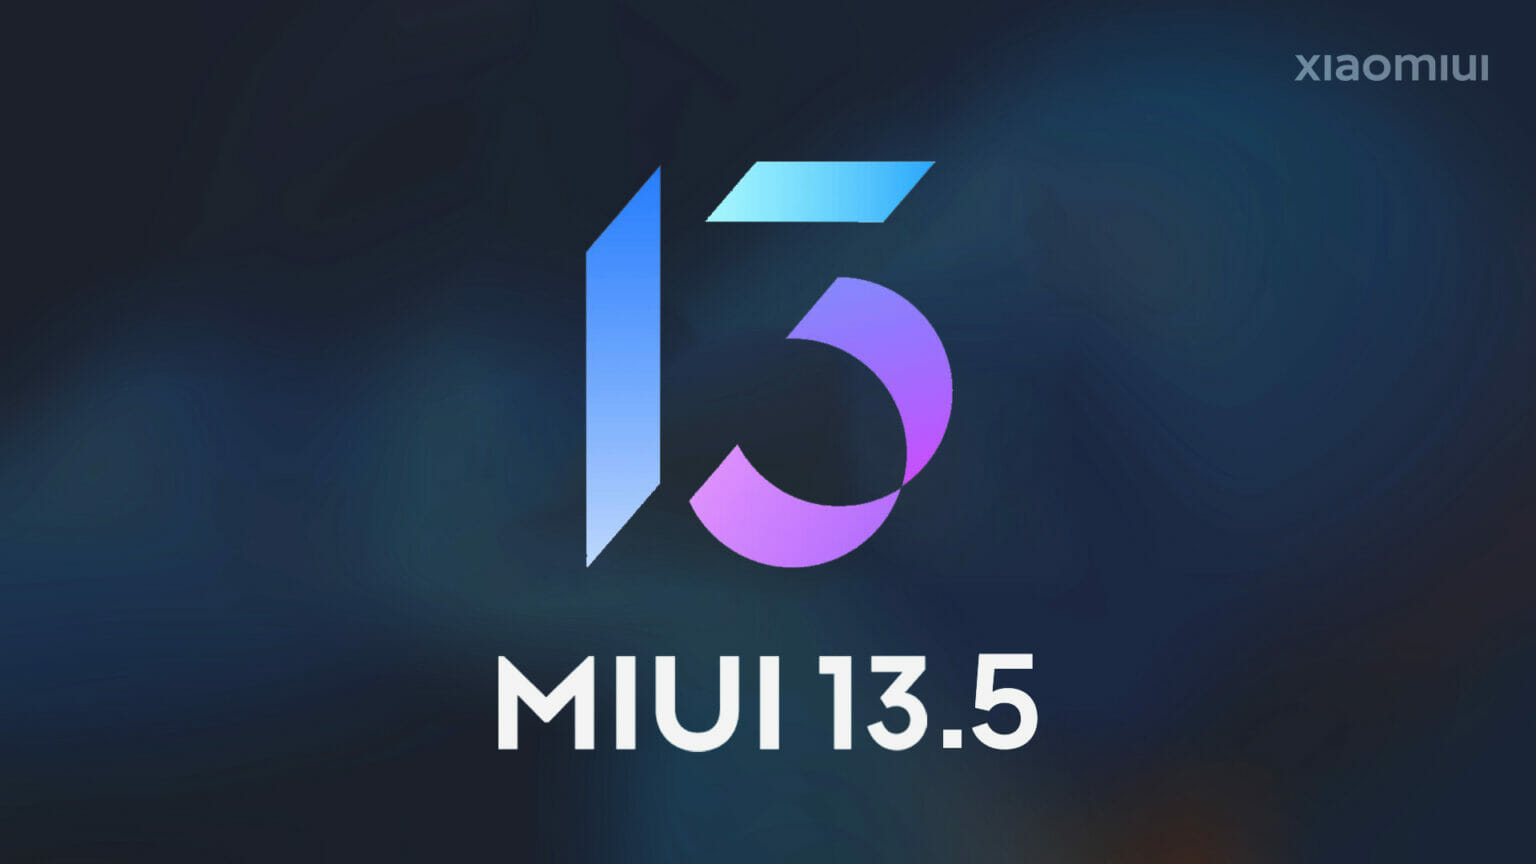 MIUI 13.5: مميزات جديدة قادمة في واجهة MIUI من شاومي